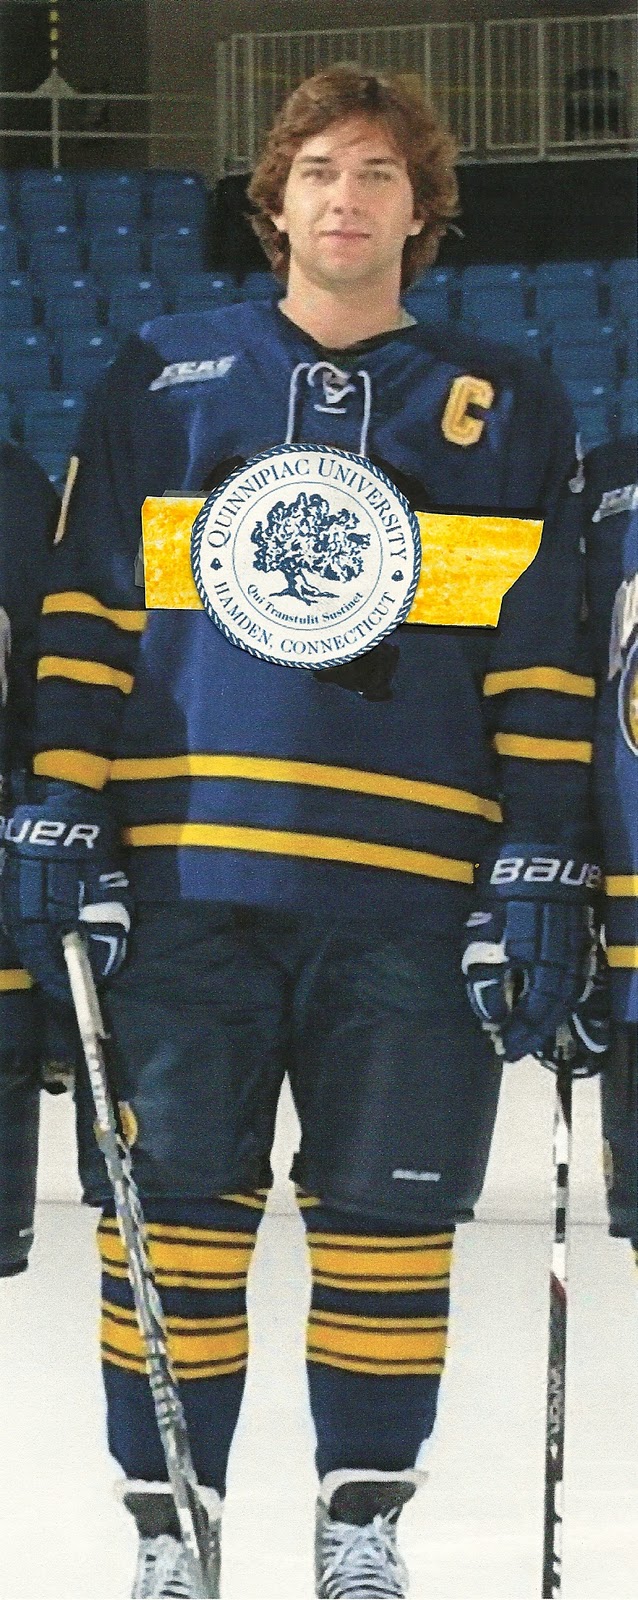 quinnipiac hockey jersey for sale